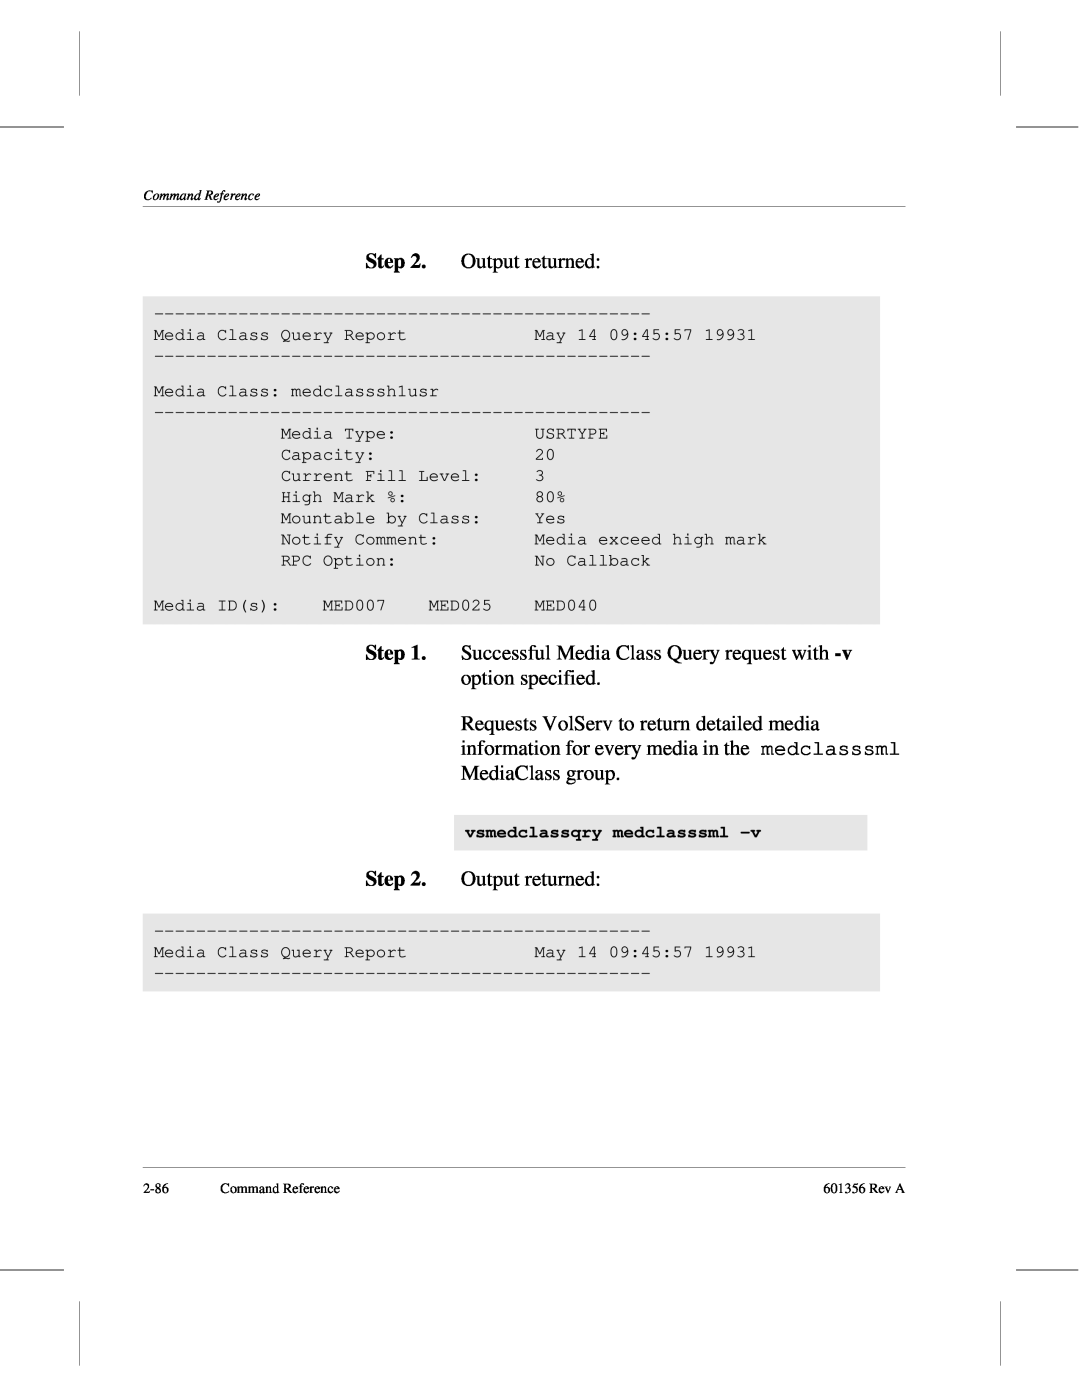 ADIC 601356 manual Step, vsmedclassqry medclasssml 